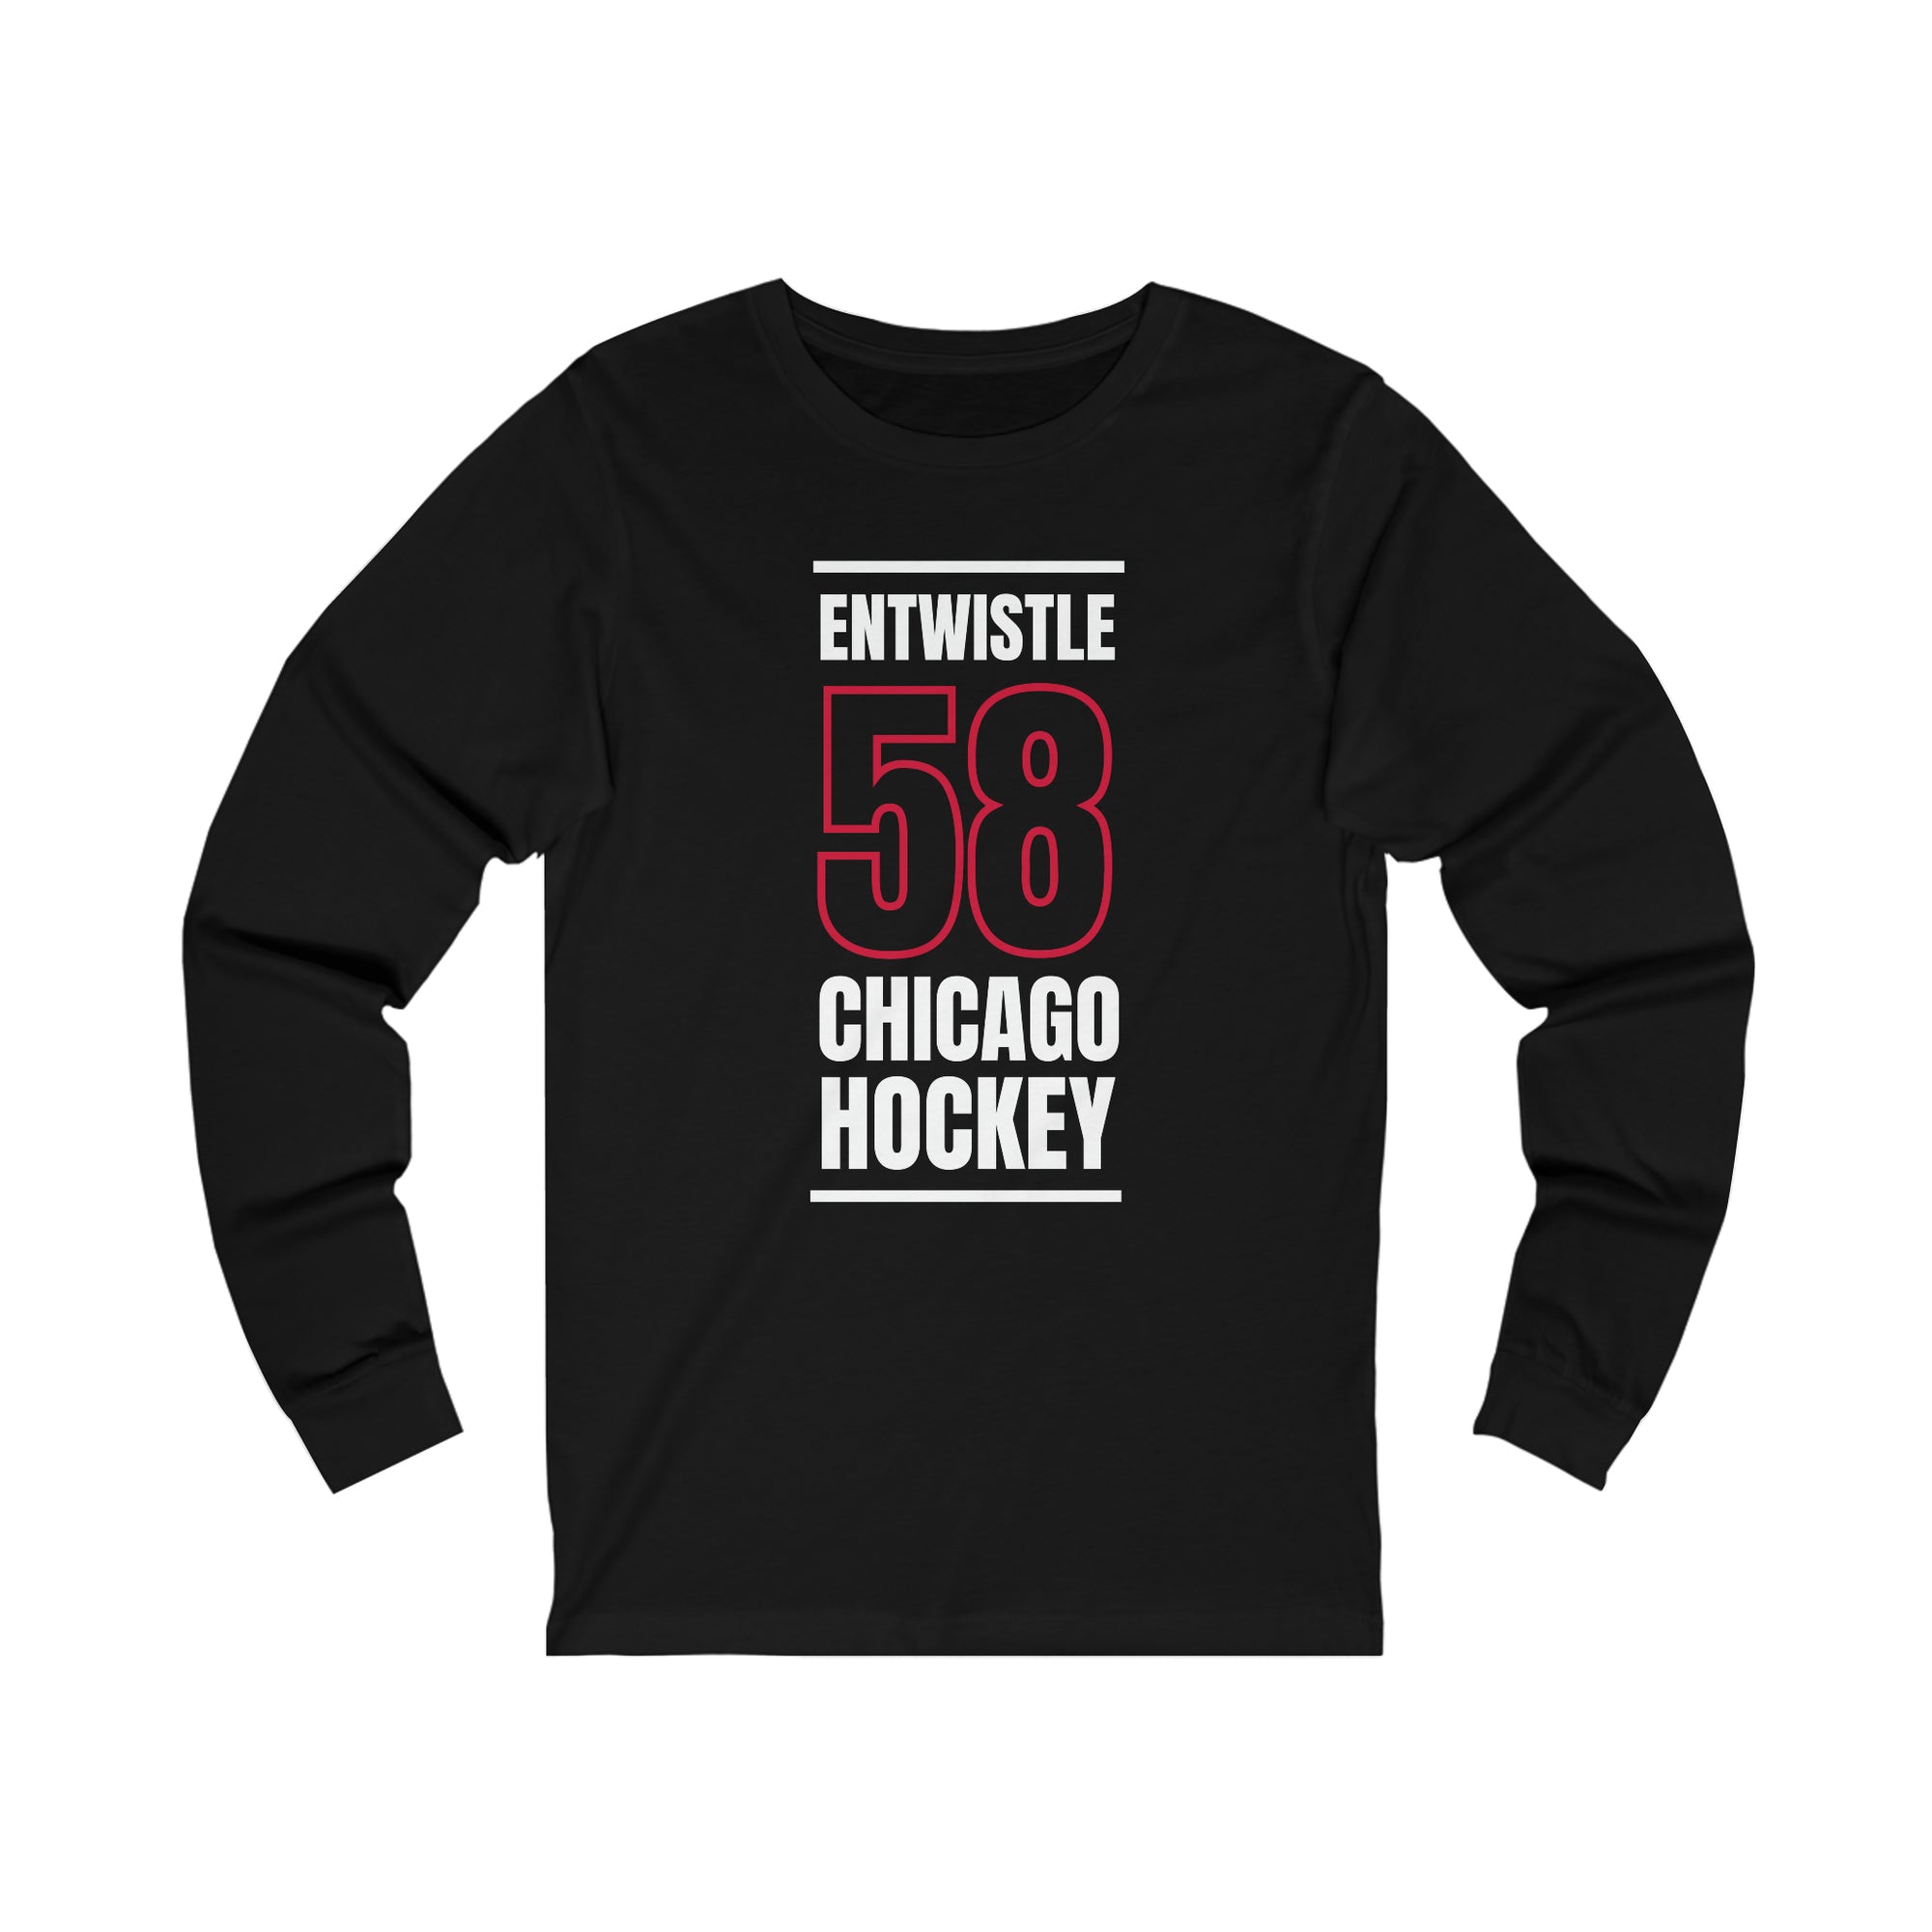 Entwistle 58 Chicago Hockey Black Vertical Design Unisex Jersey Long Sleeve Shirt